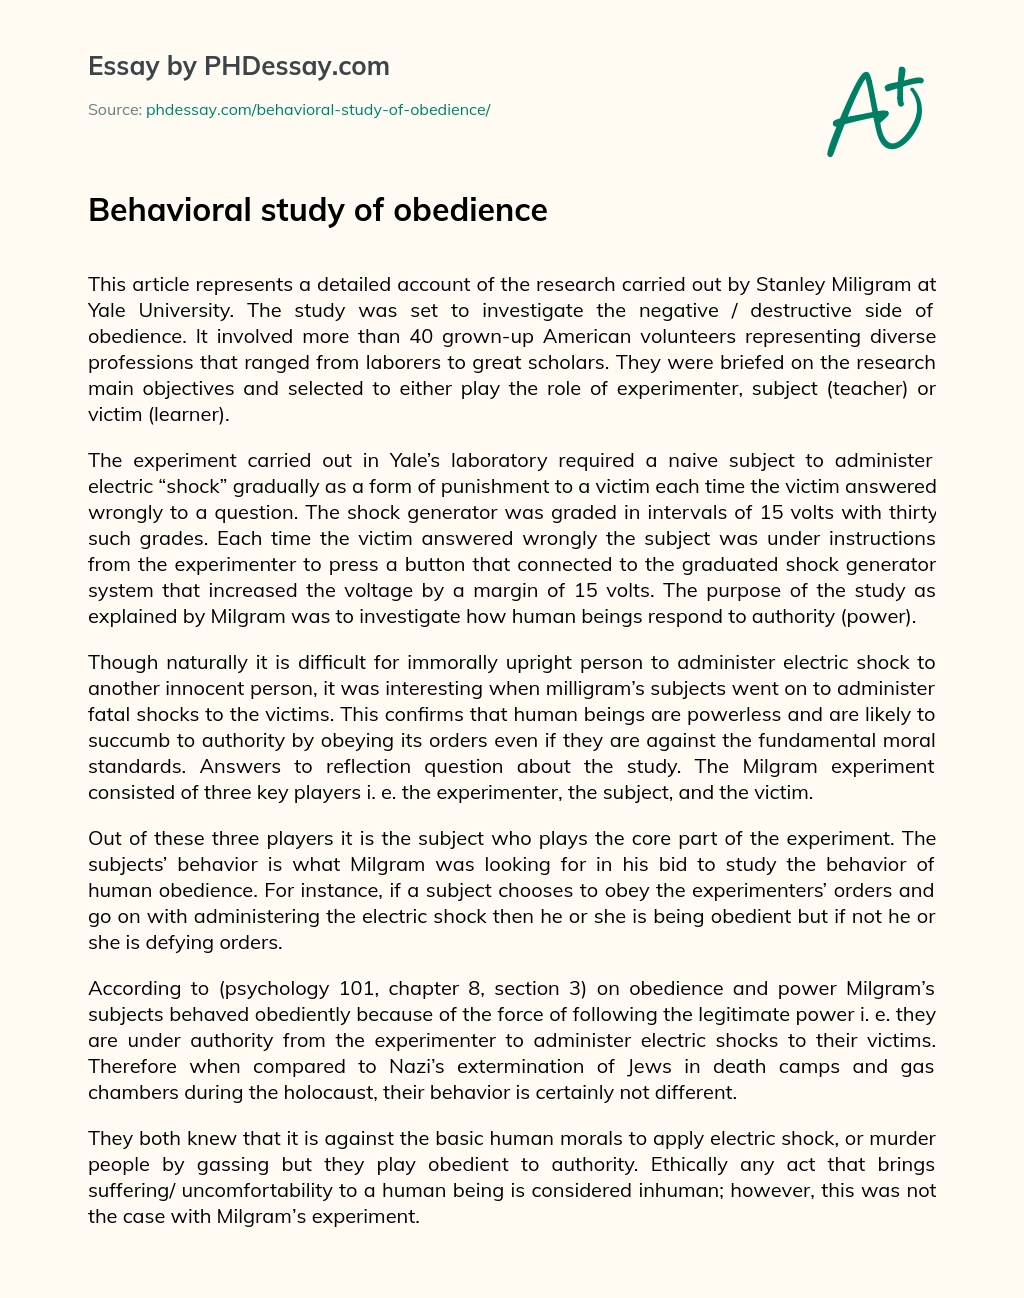 Behavioral study of obedience essay